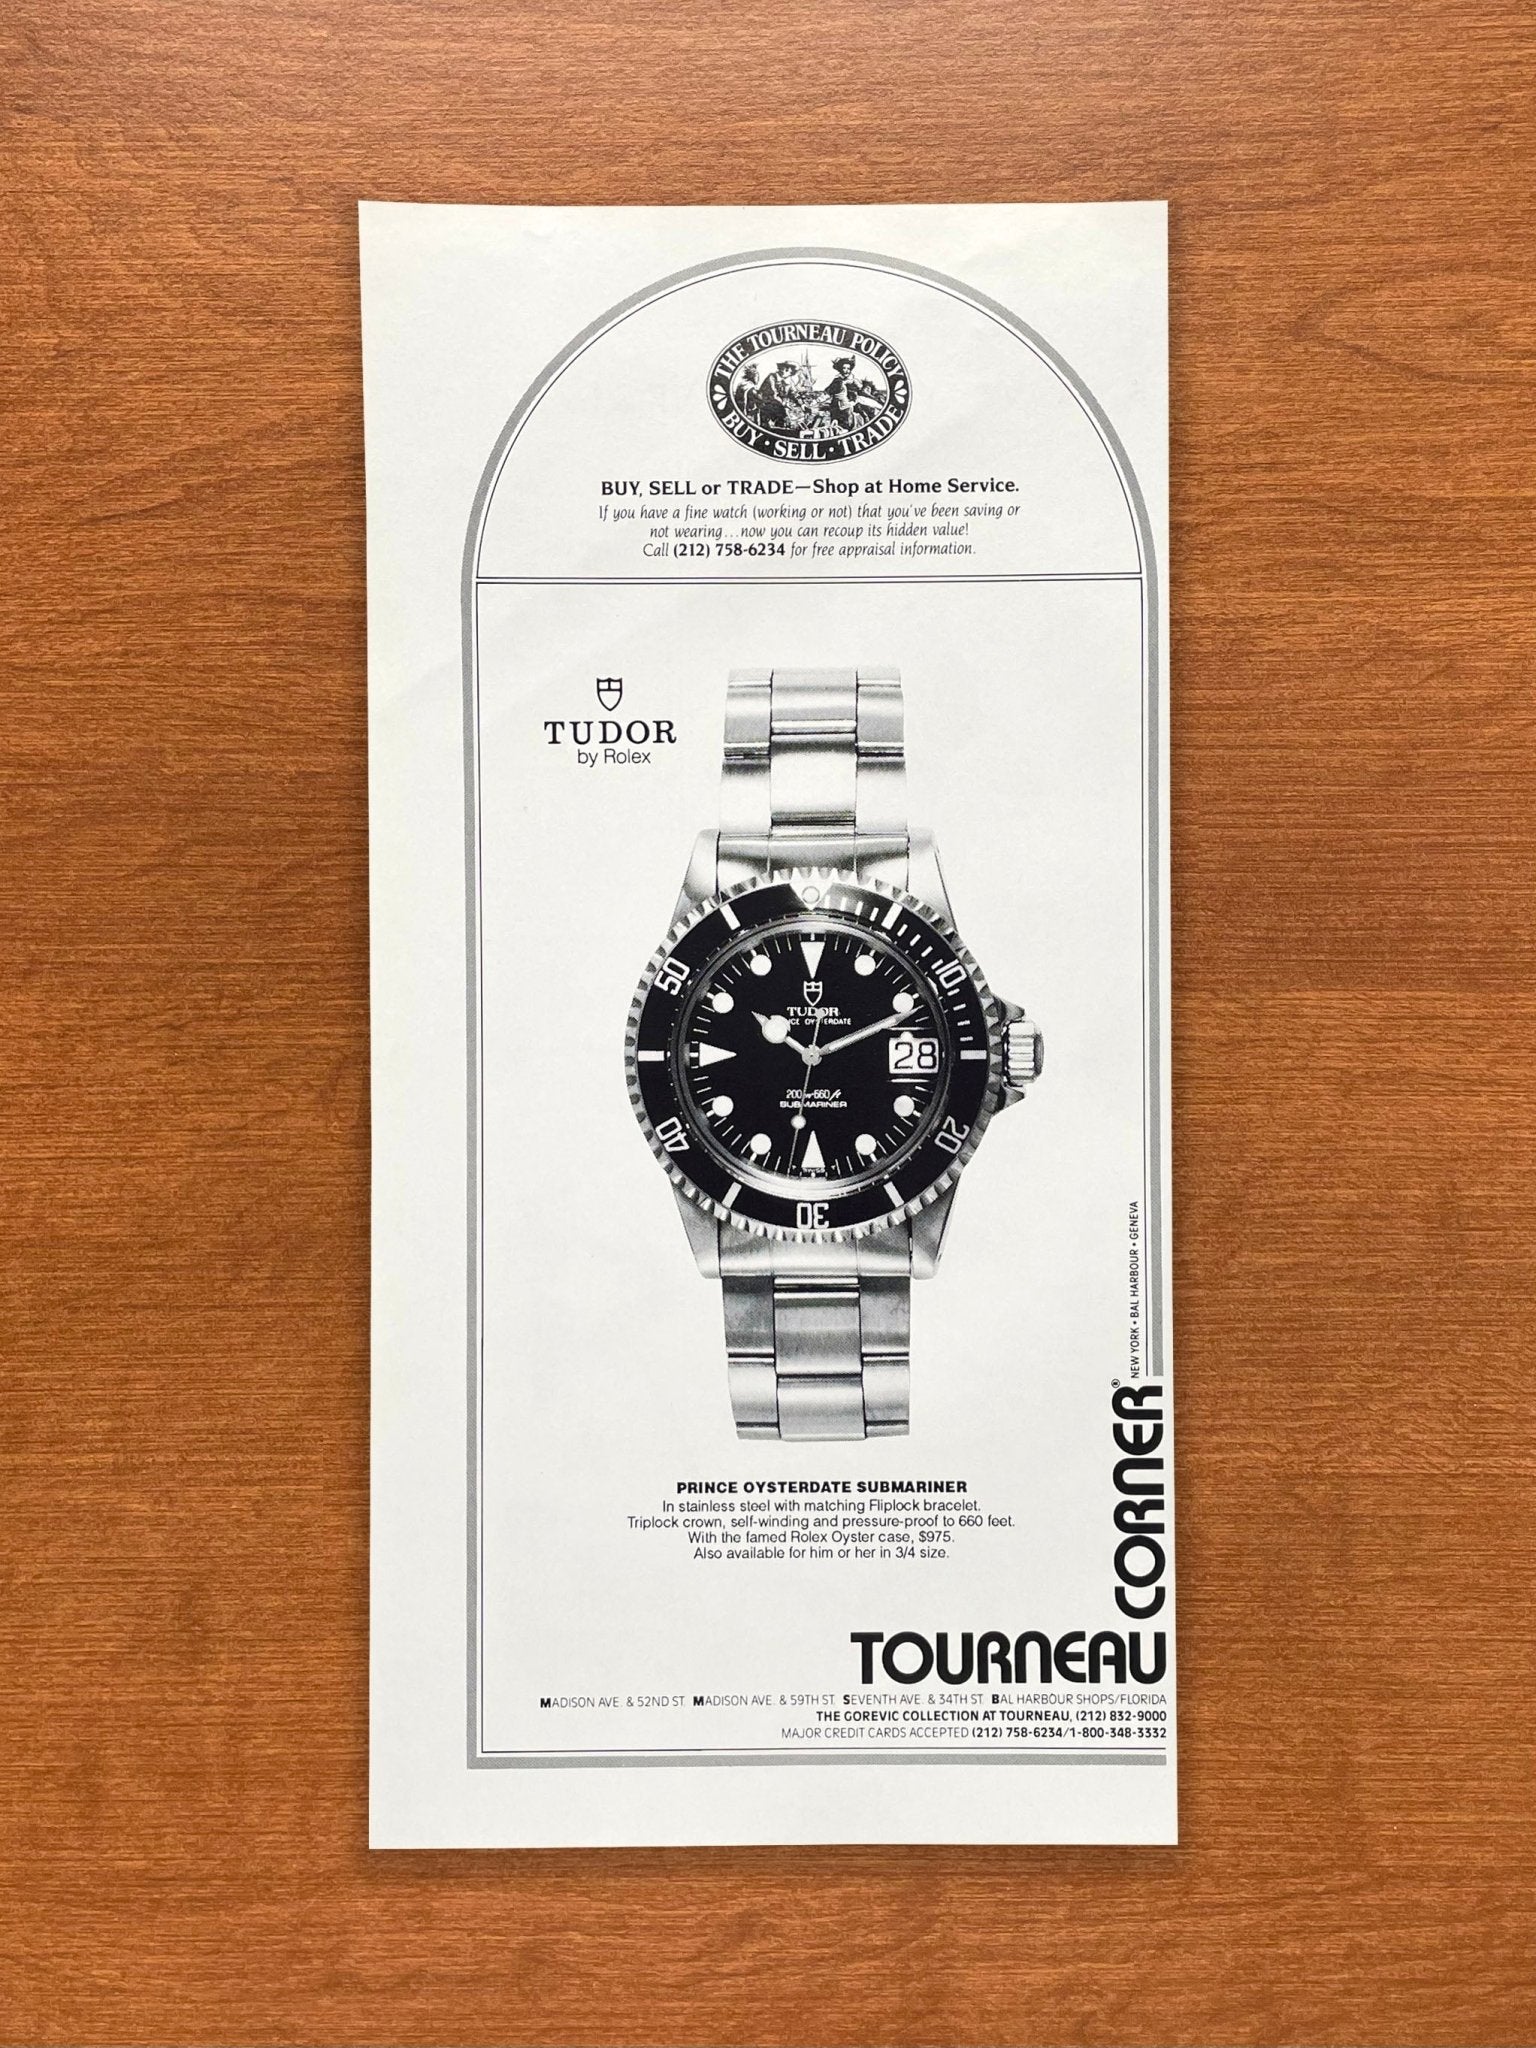 1991 Tudor "Lollipop" Submariner at Tourneau Advertisement